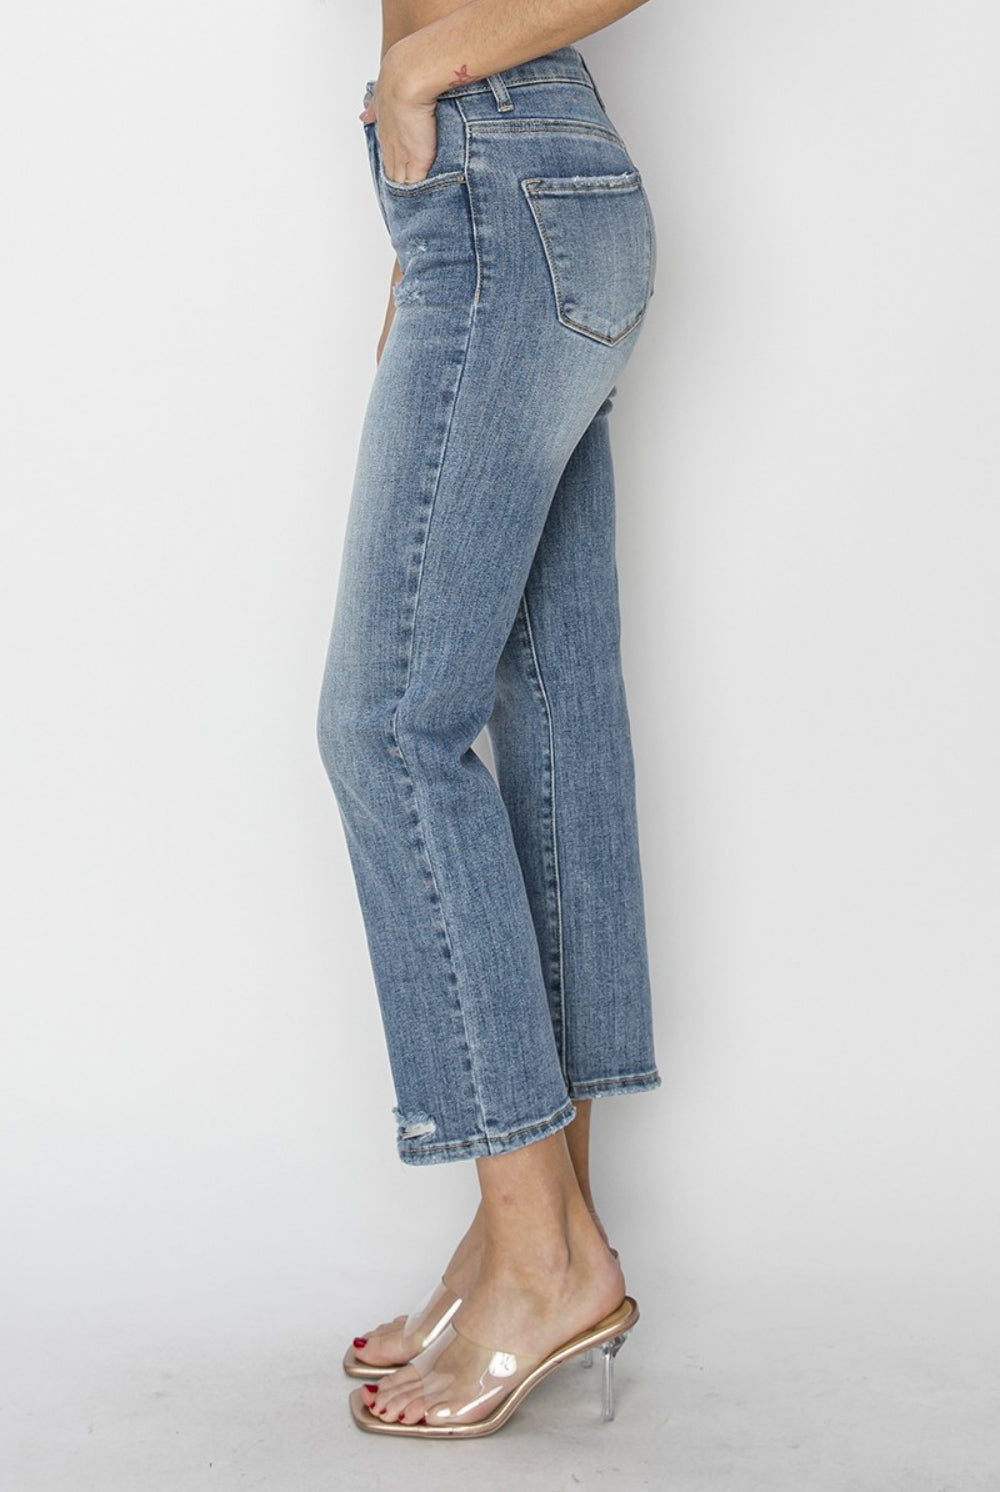 Light Gray RISEN Full Size High Waist Distressed Cropped Jeans Denim